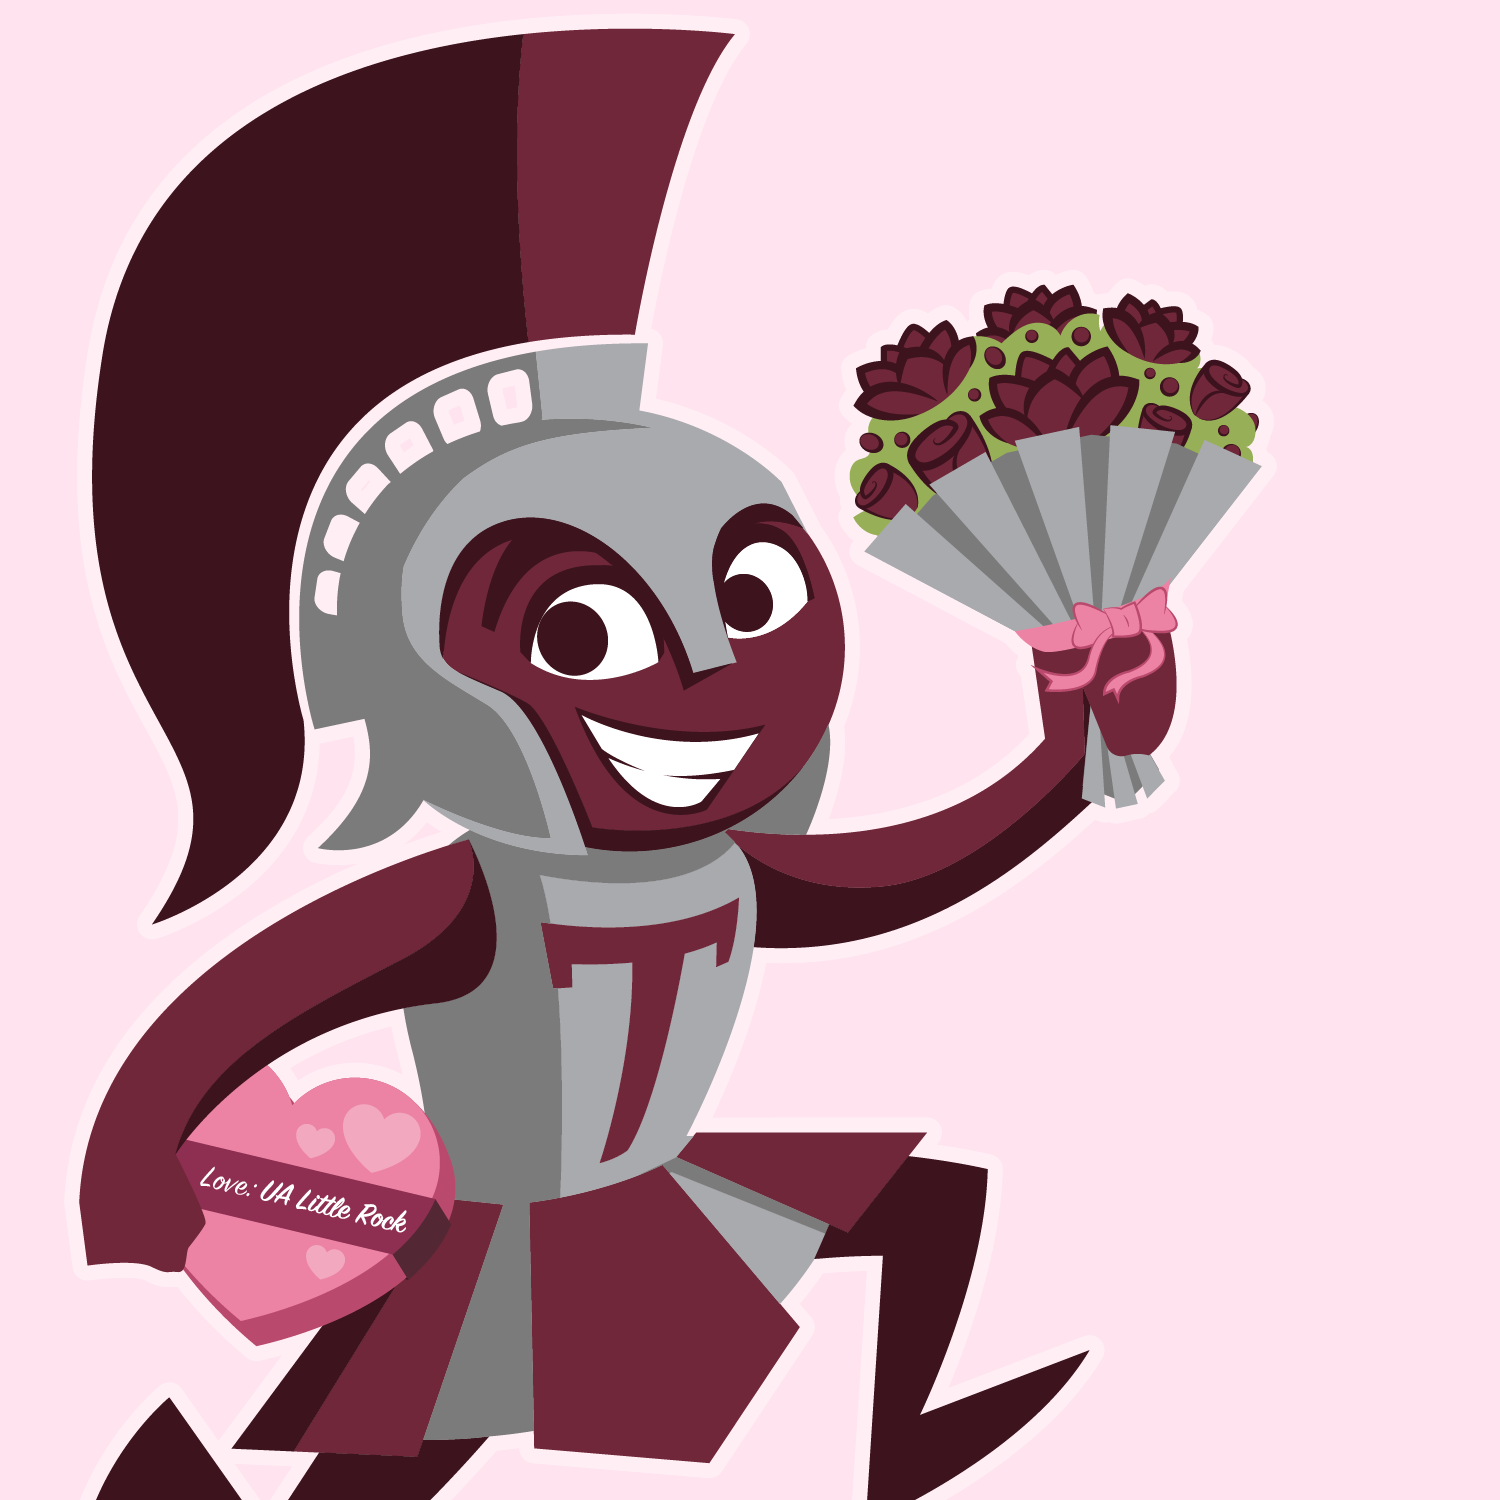 Cartoon Trojan man with flowers and chocolates.